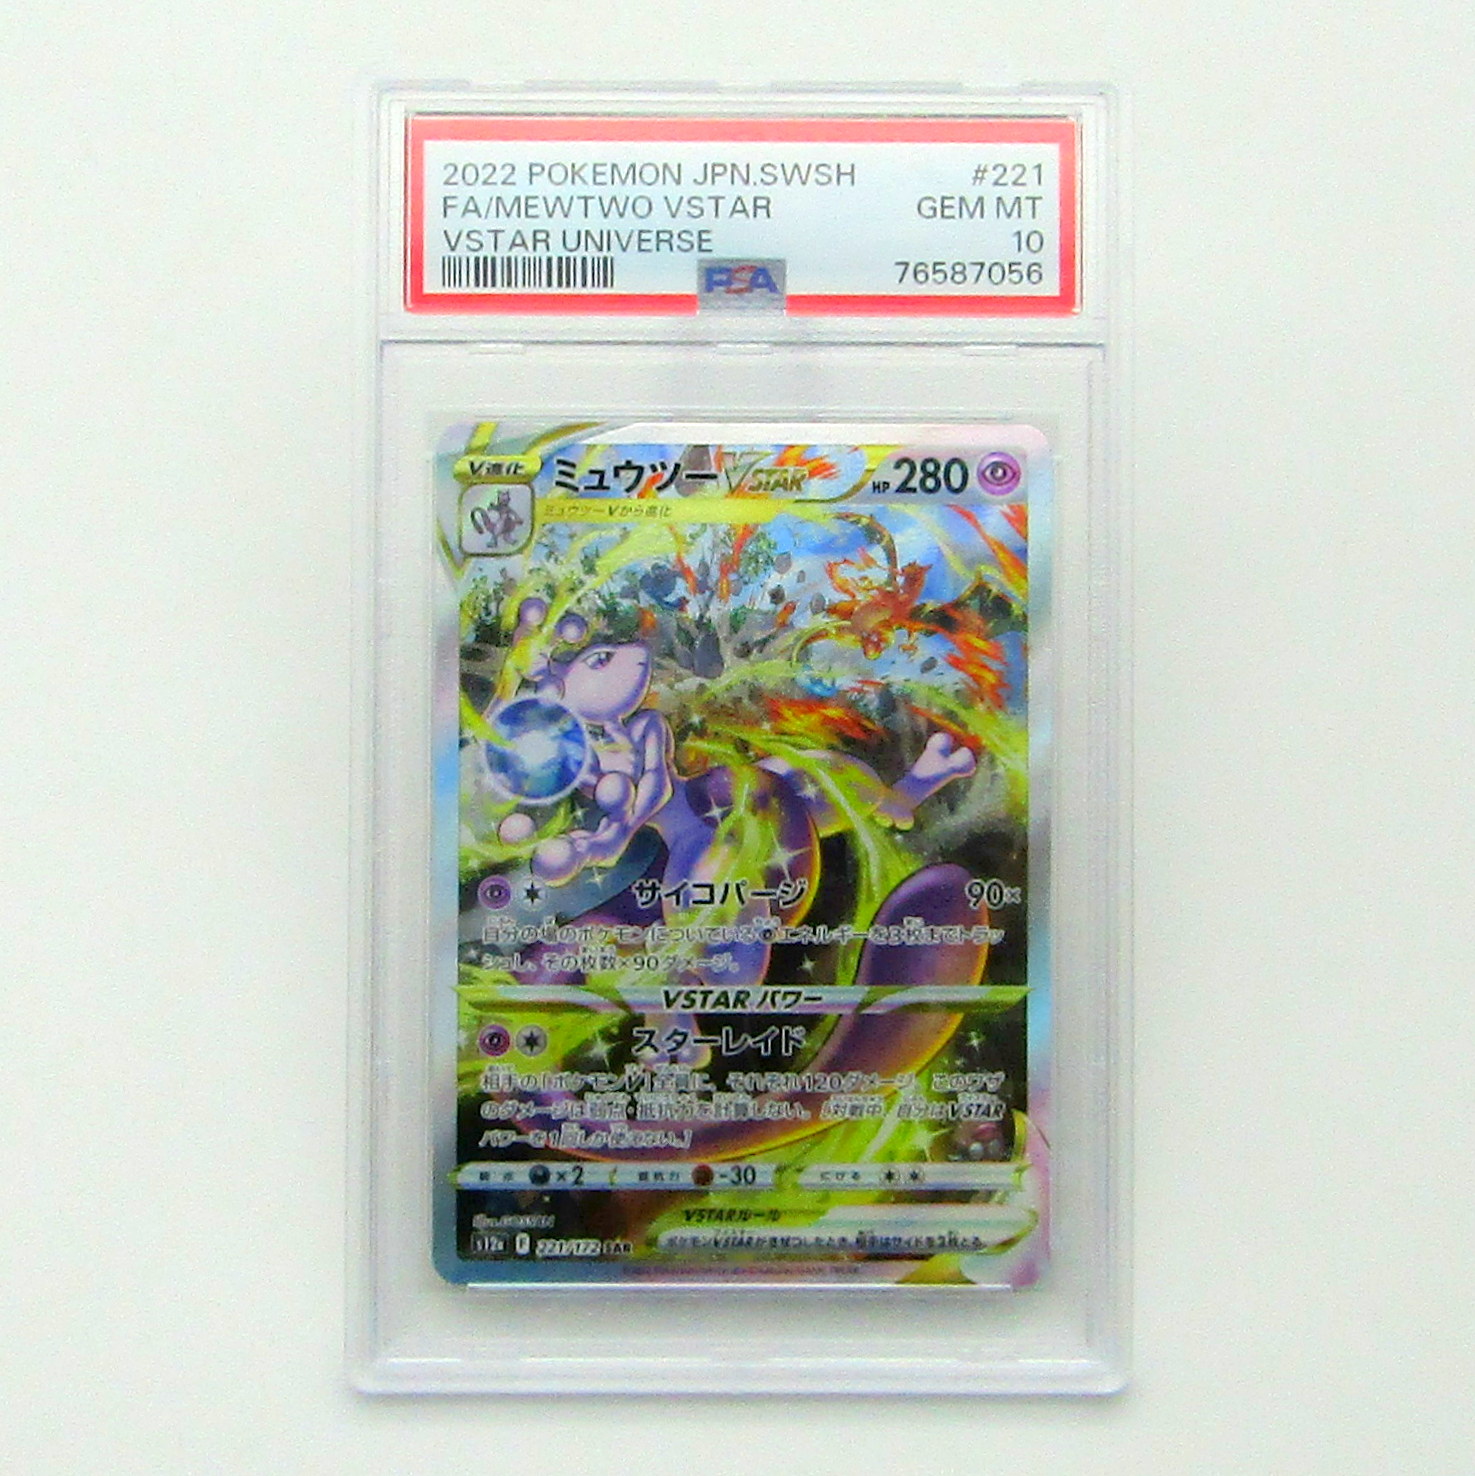 Pokémon card. FA/MEWTWO VSTAR s12a 221. Japanese. VSTAR UNIVERSE. PSA 10